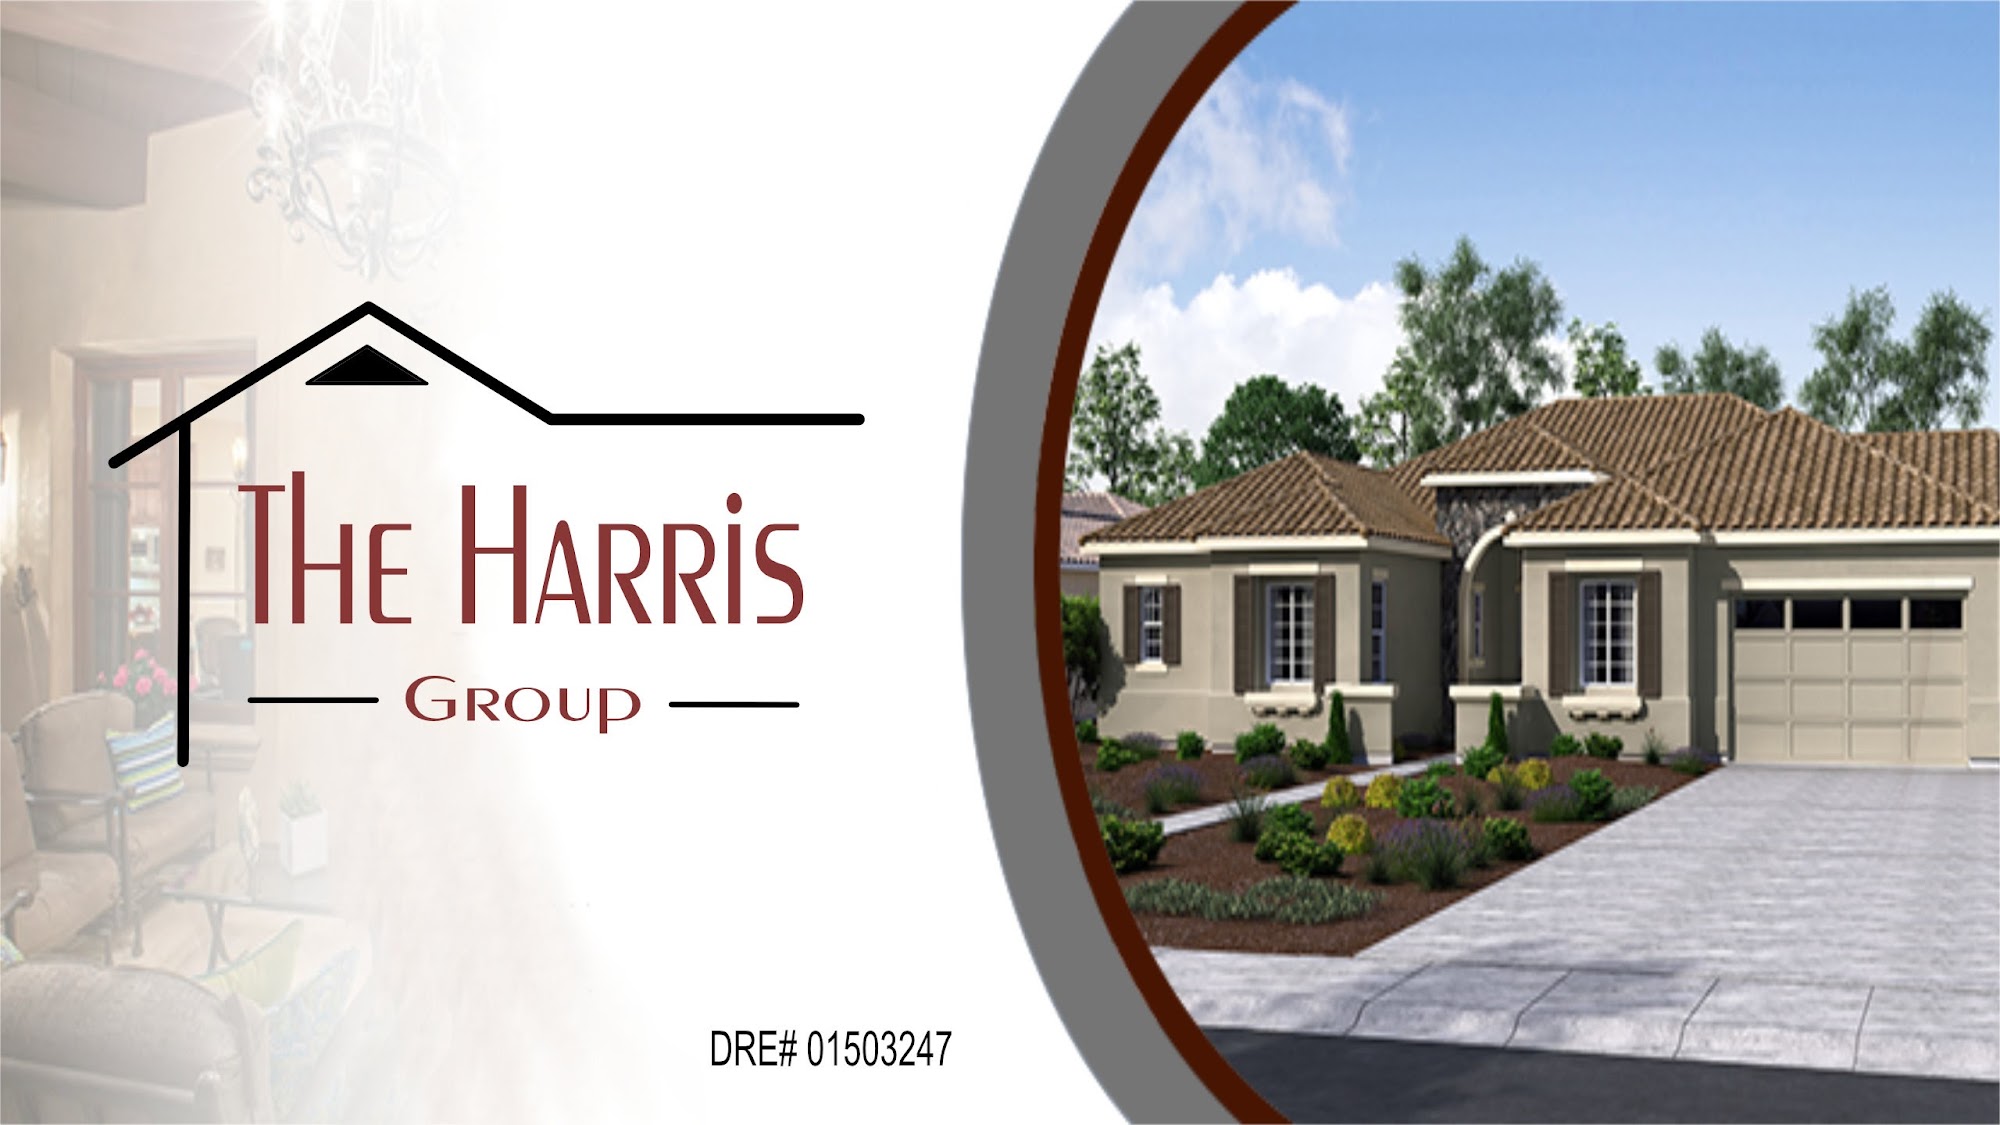 The Harris Group